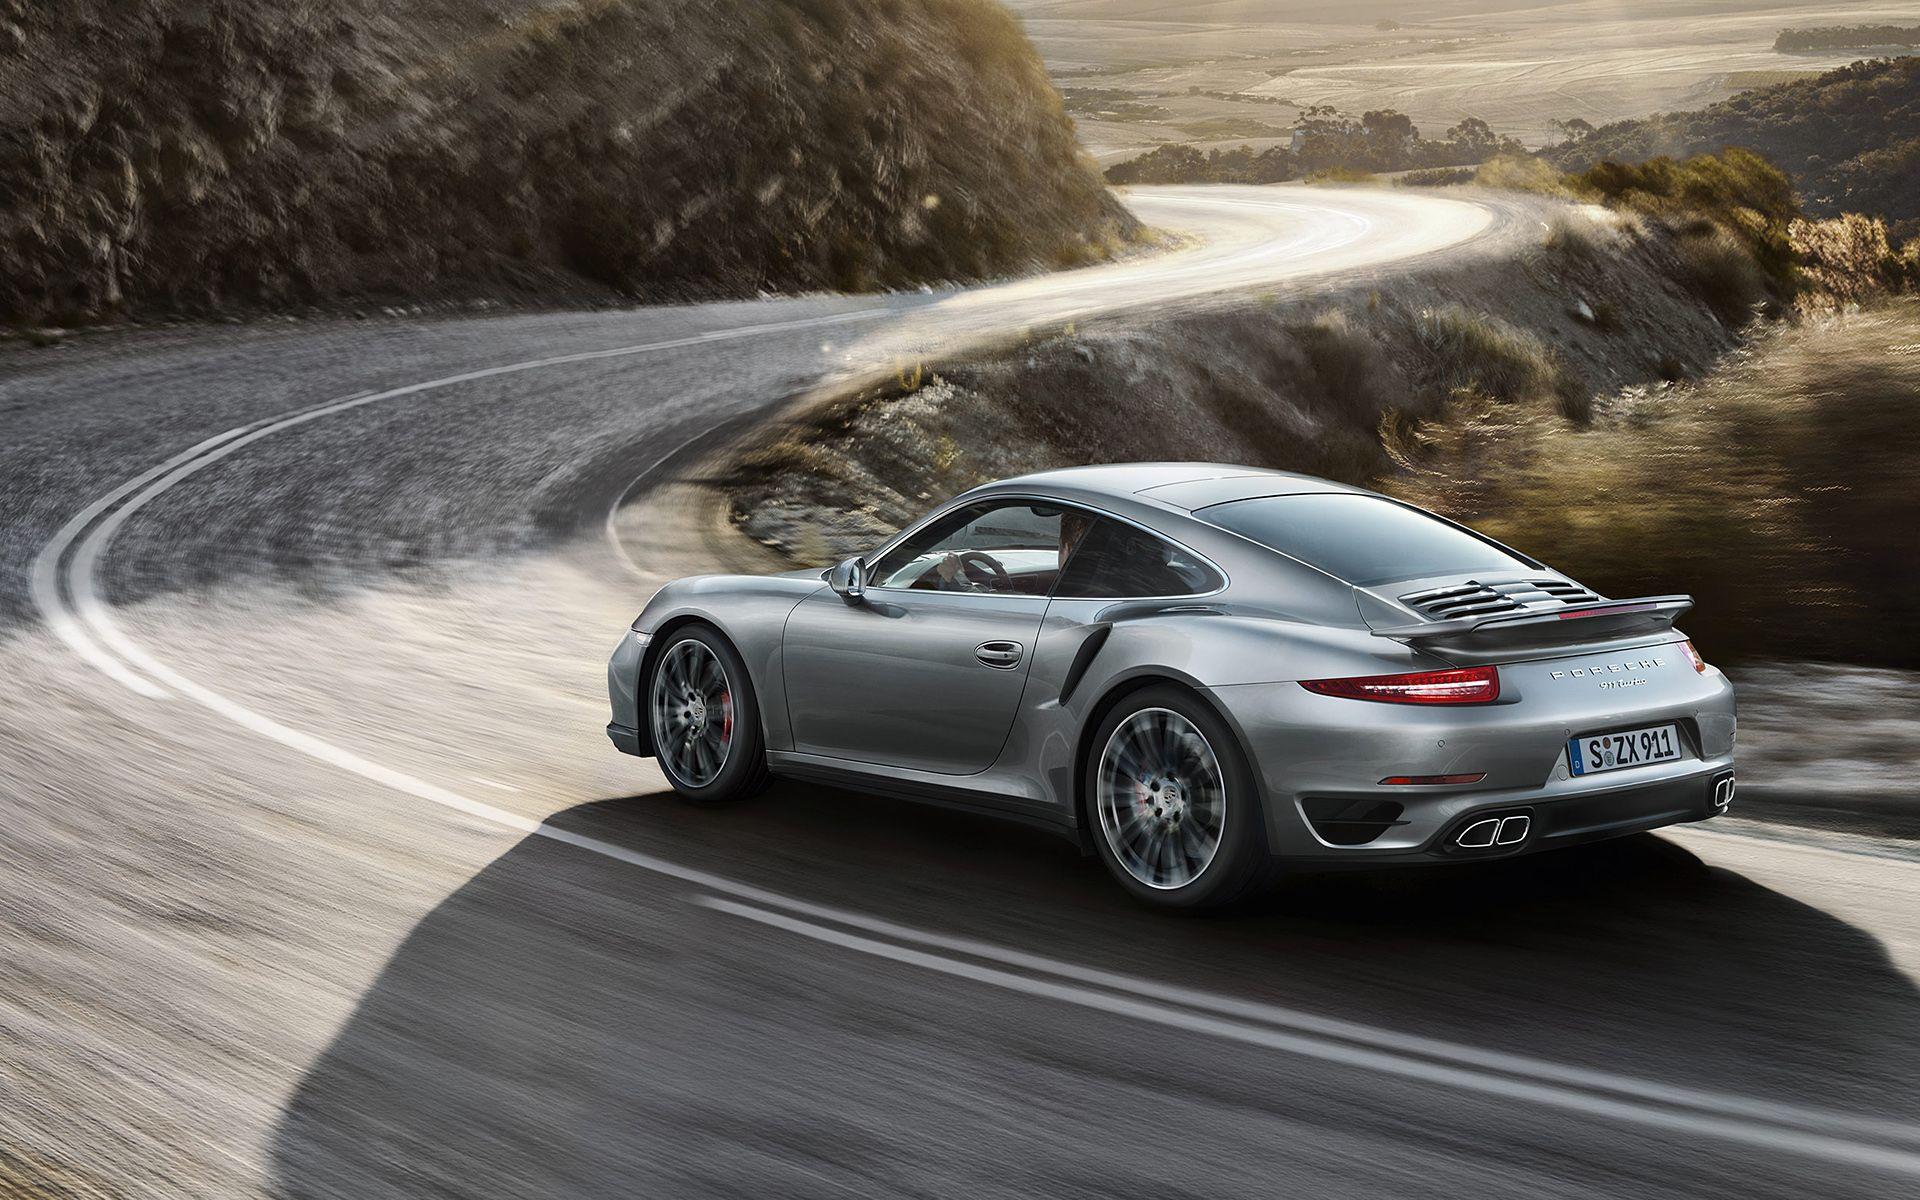 Porsche 911 Turbo 2015 HD Wallpaper, Background Image